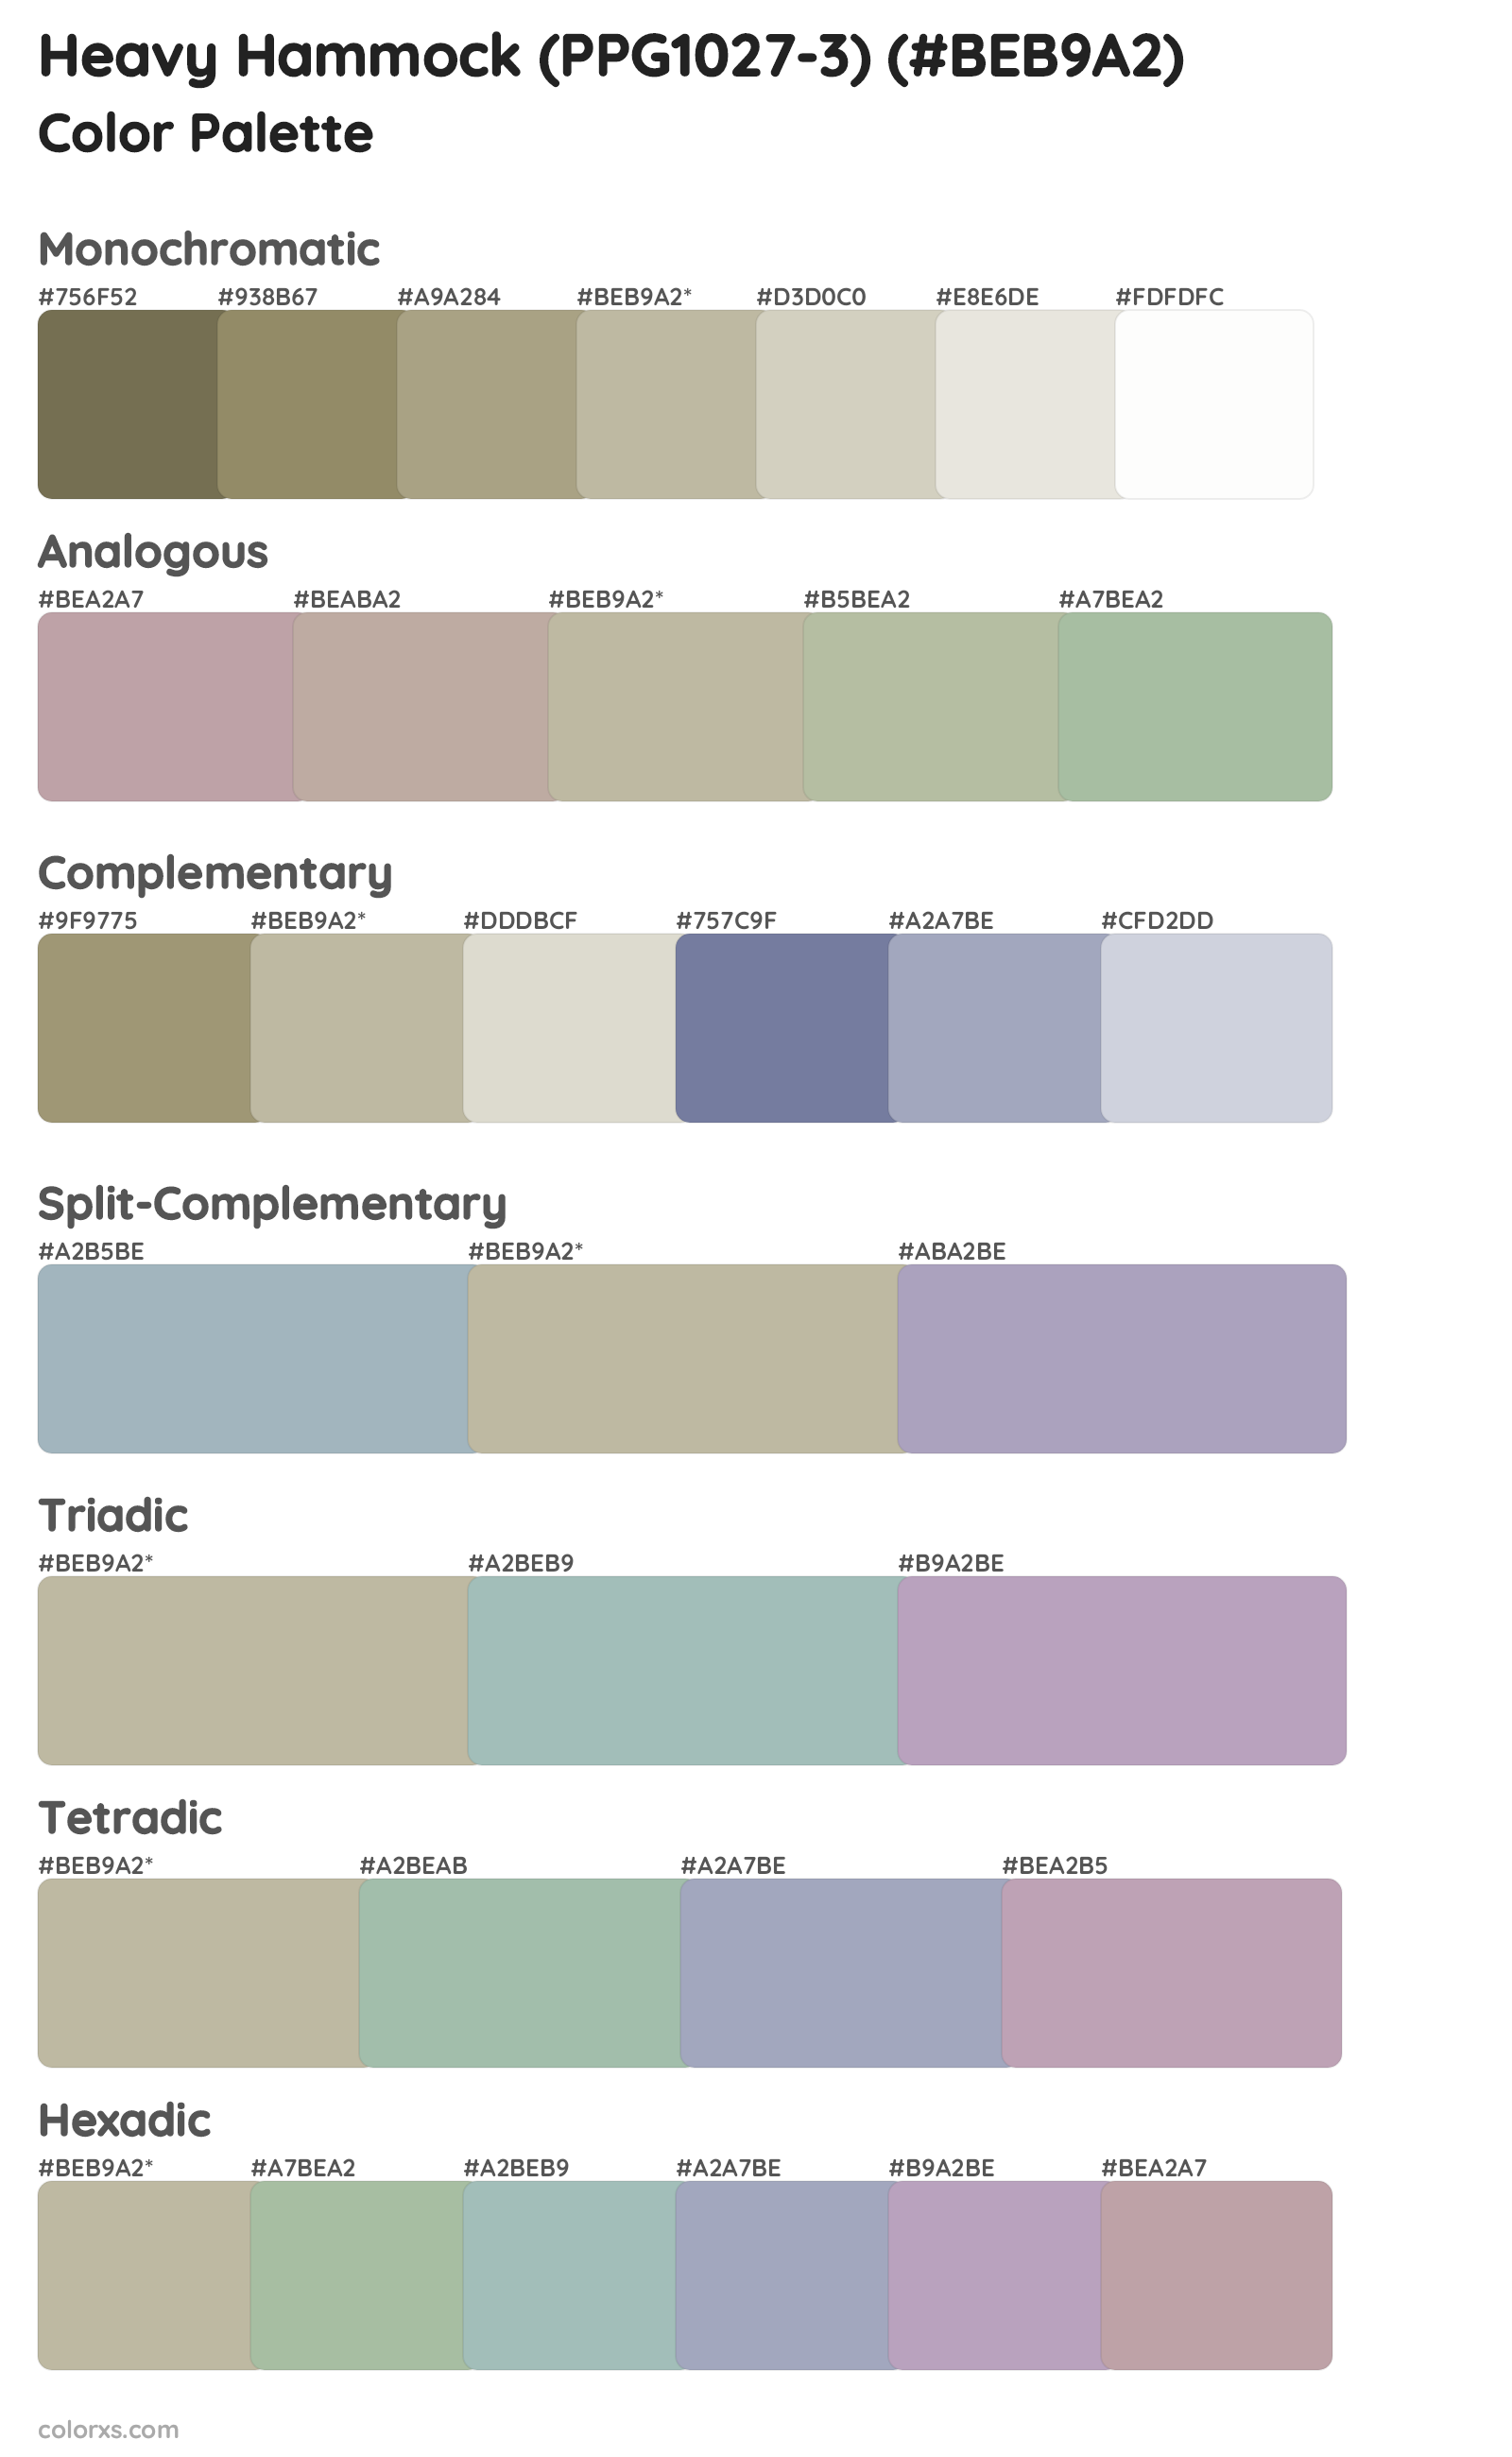 Heavy Hammock (PPG1027-3) Color Scheme Palettes